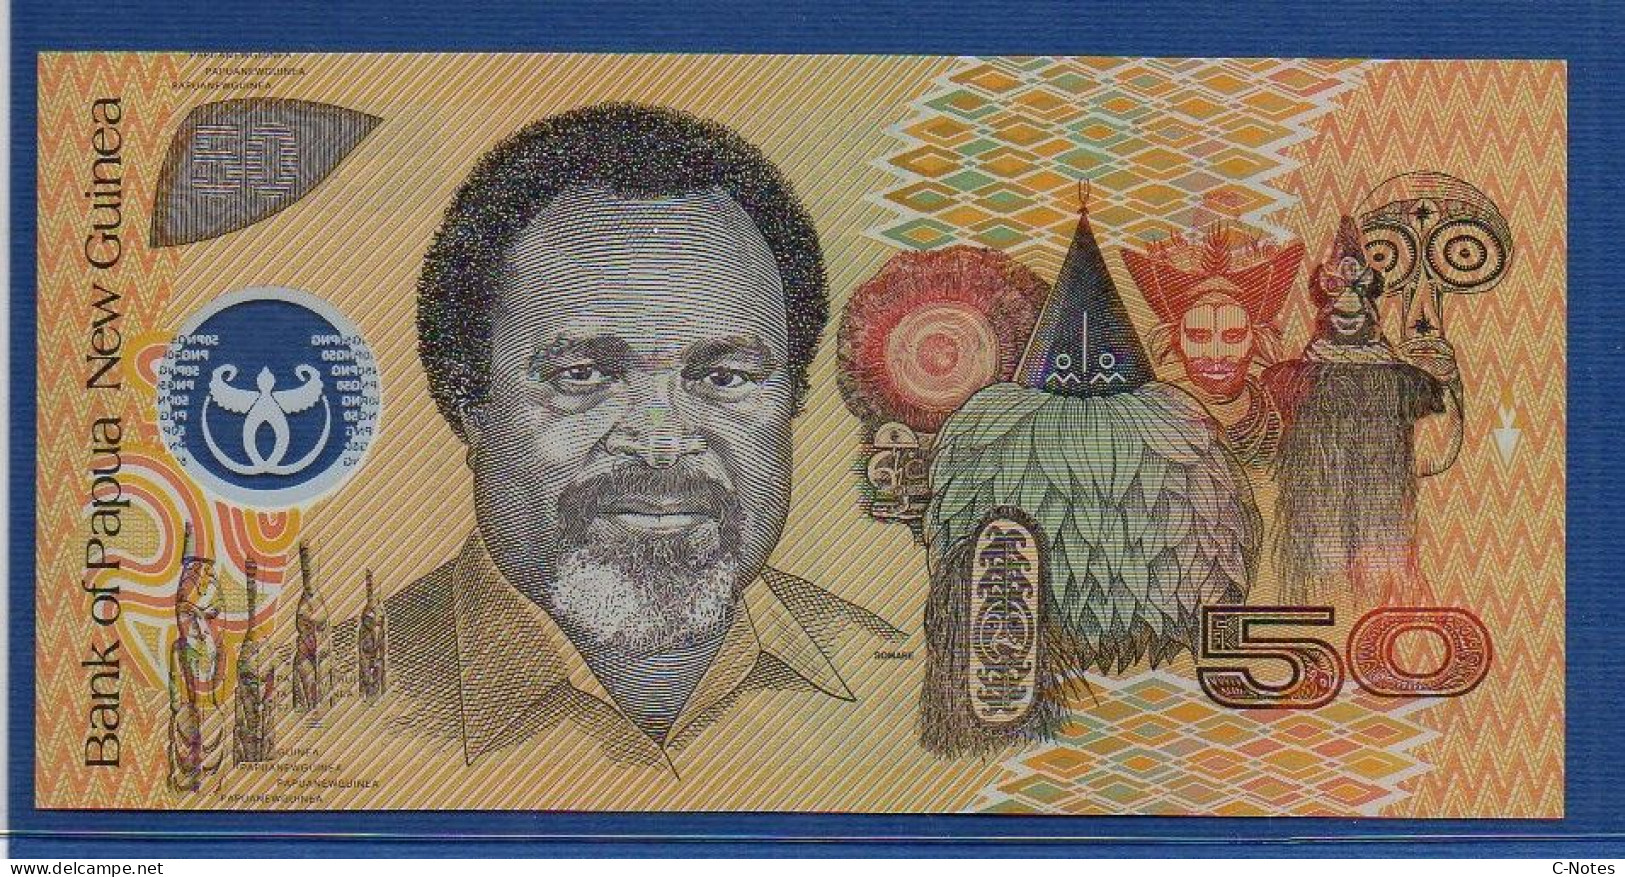 PAPUA NEW GUINEA - P.18a – 50 KINA 1999 UNC, S/n MV 99 188 847 - Papua New Guinea